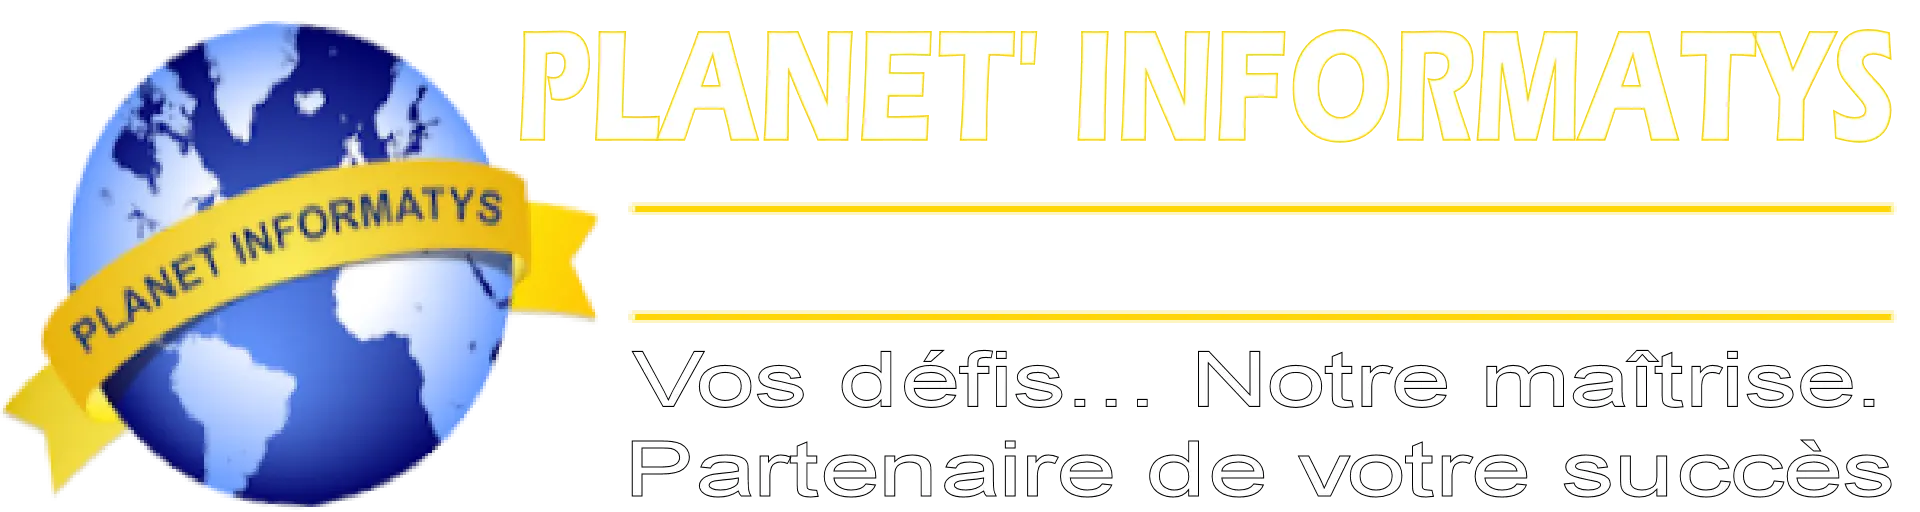 Planet' Informatys 